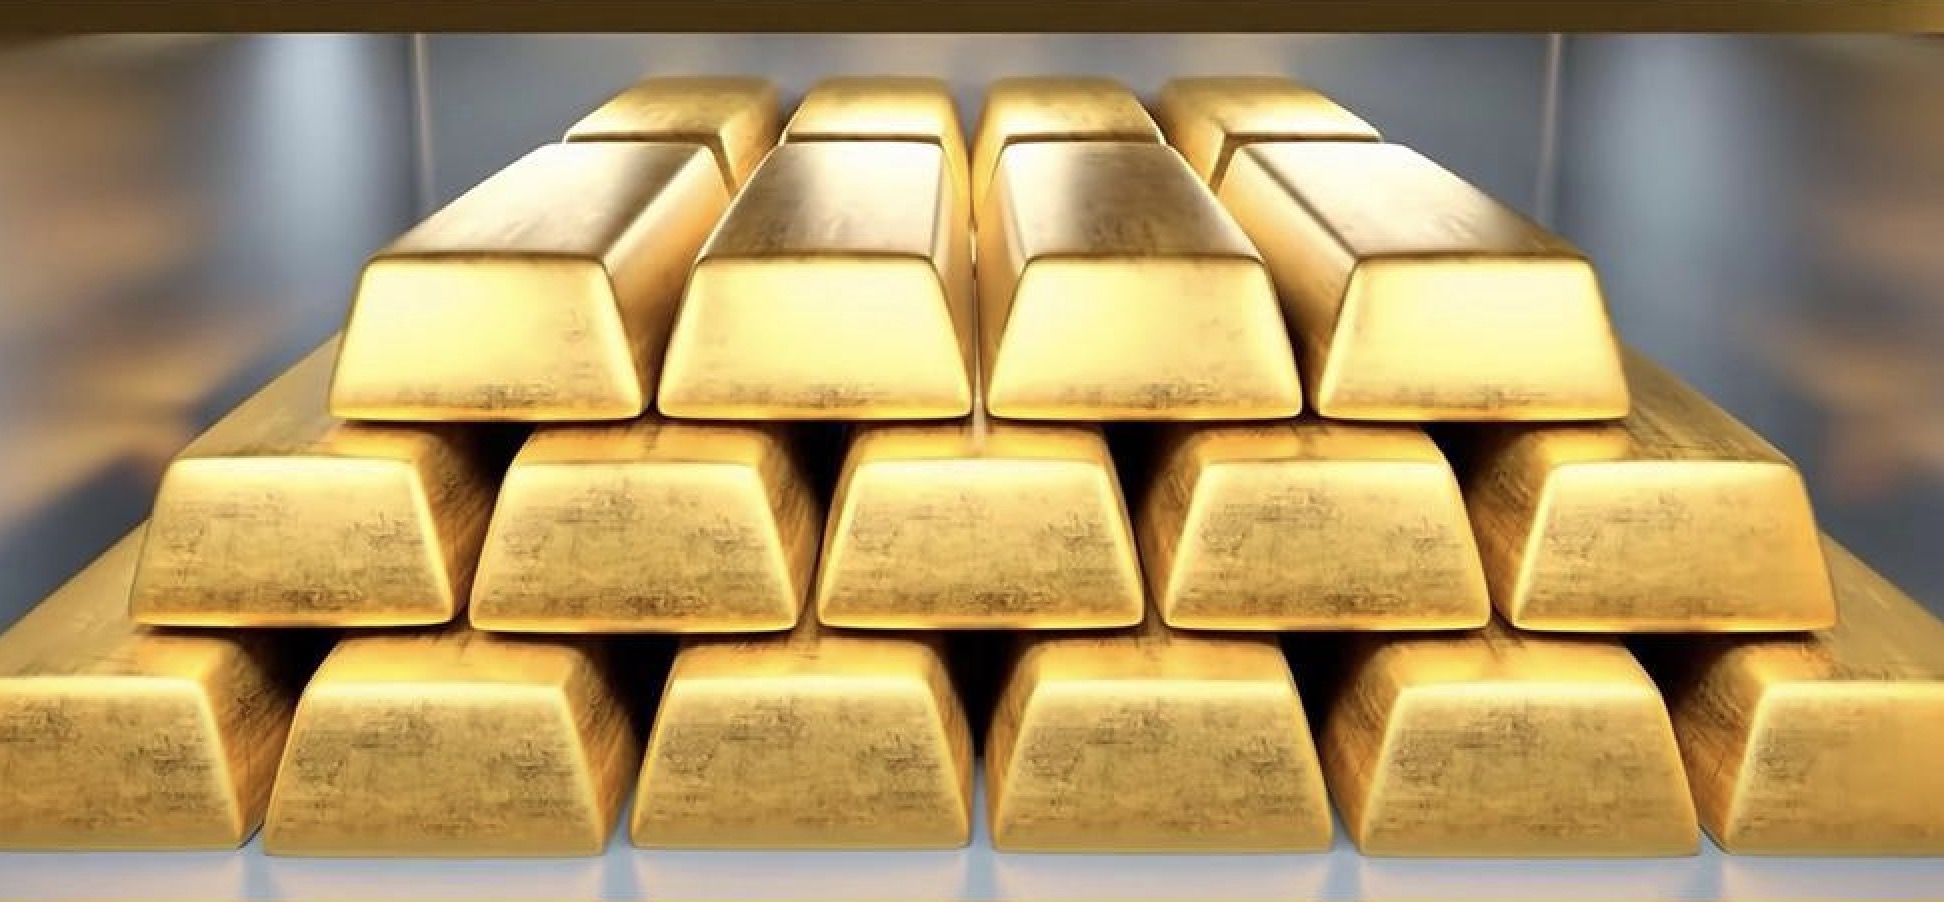 Pengingat perdagangan emas: Pembeli "melawan" harga emas rebound di atas $30, data PCE AS sangat terpukul